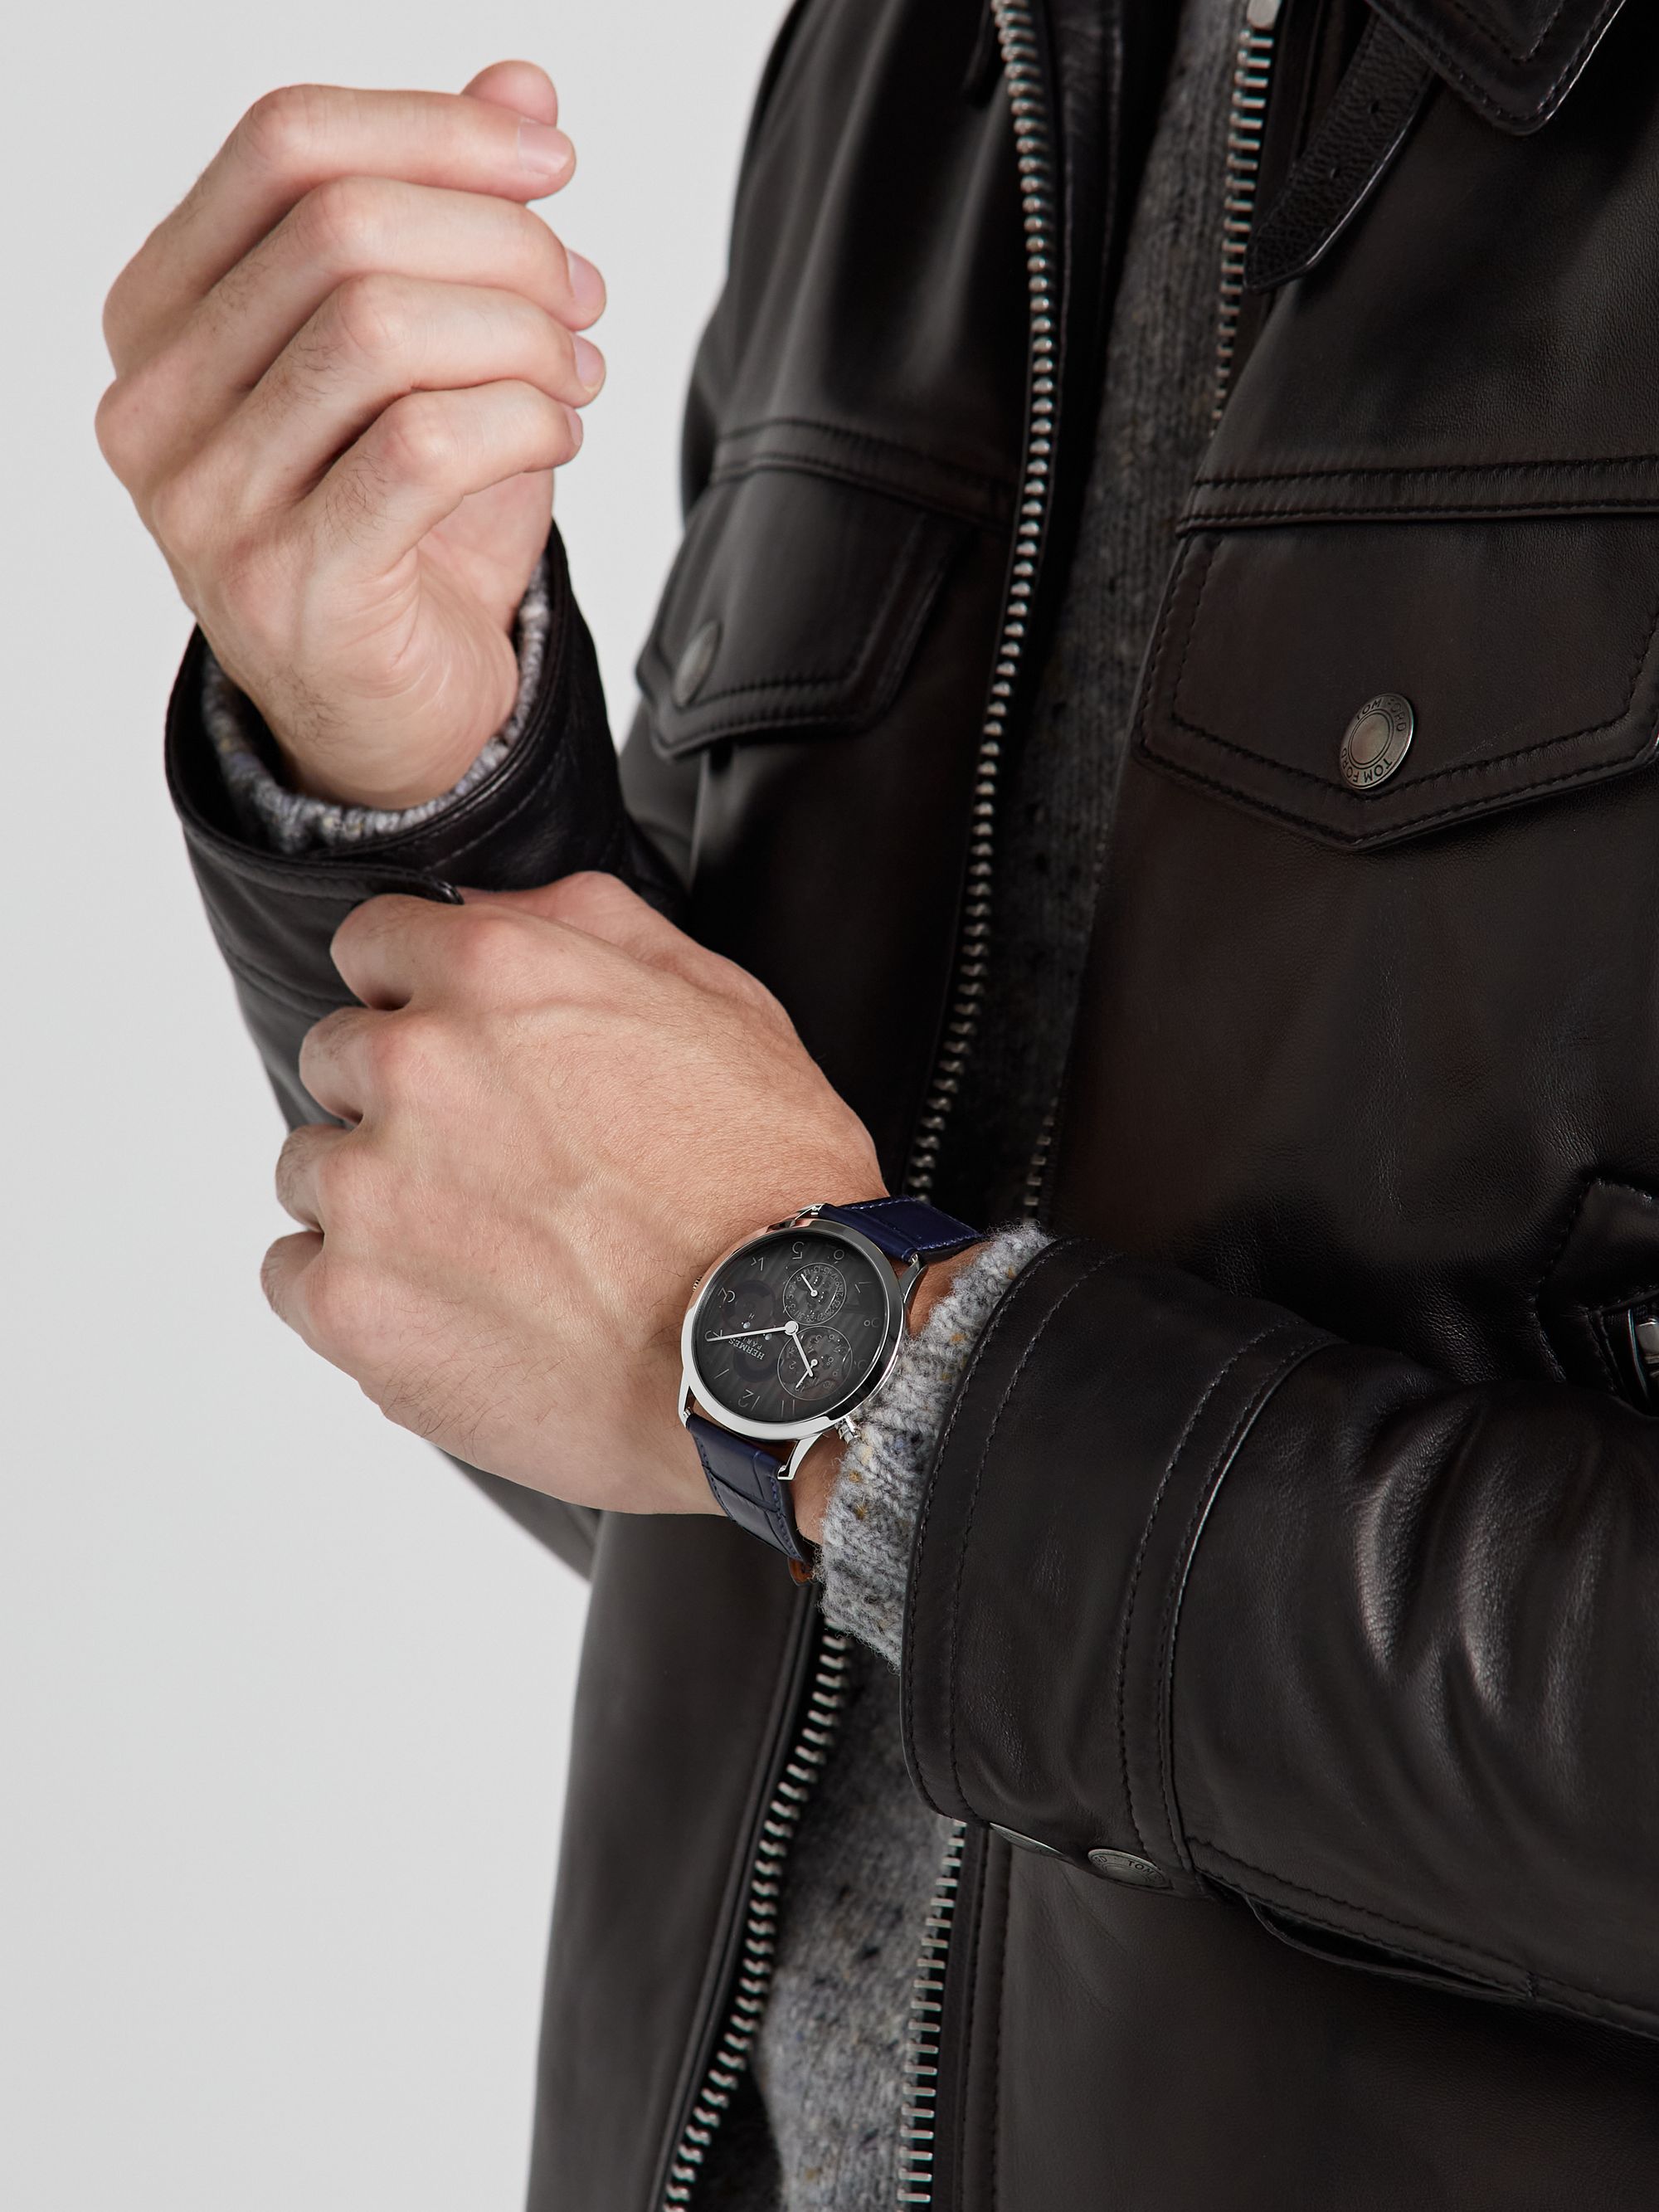 HERMÈS TIMEPIECES Slim d'Hermès Automatic GMT 39mm Platinum and Alligator Watch, Ref. No. 054157WW00